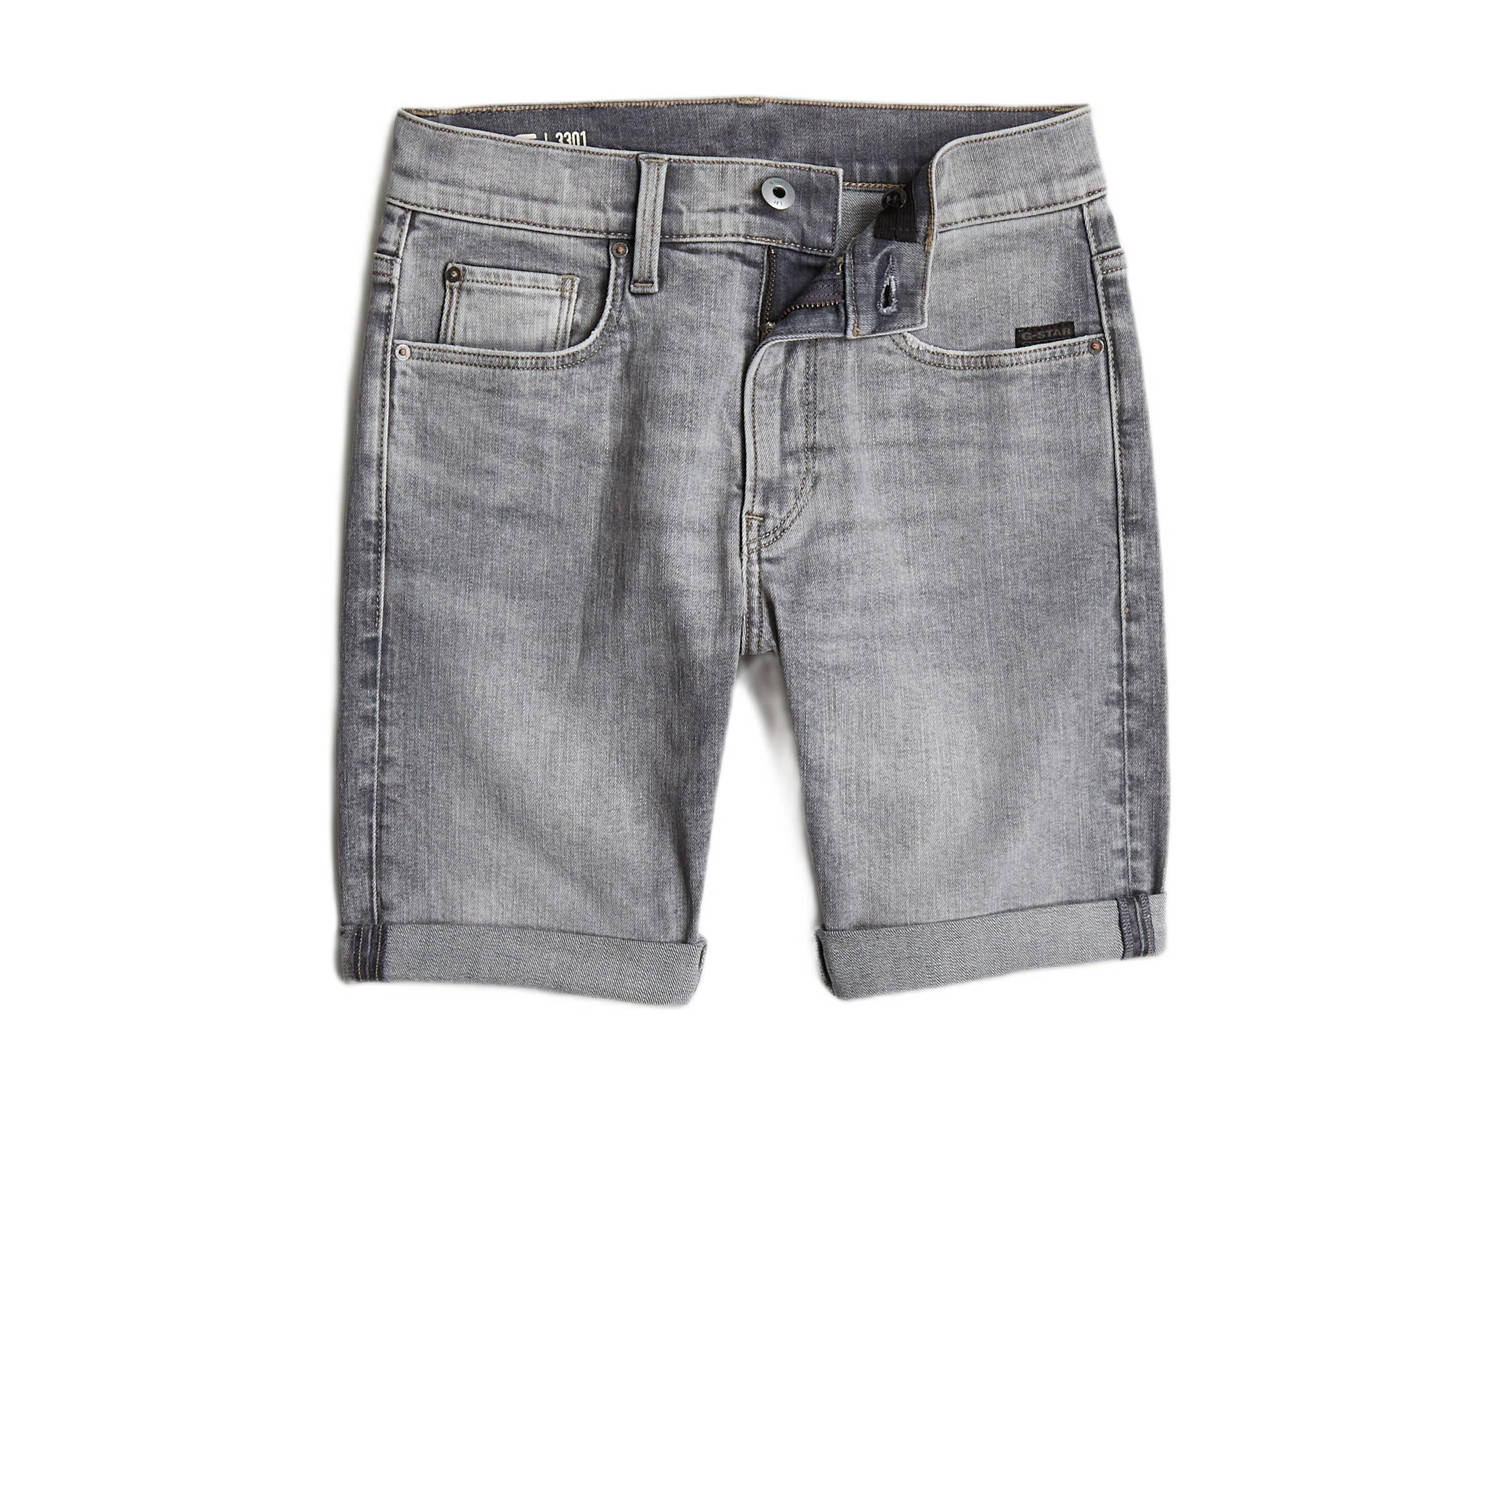 G-Star Raw 3301 slim shorts premium denim short faded grey neblina Korte broek Grijs Jongens Stretchdenim 116